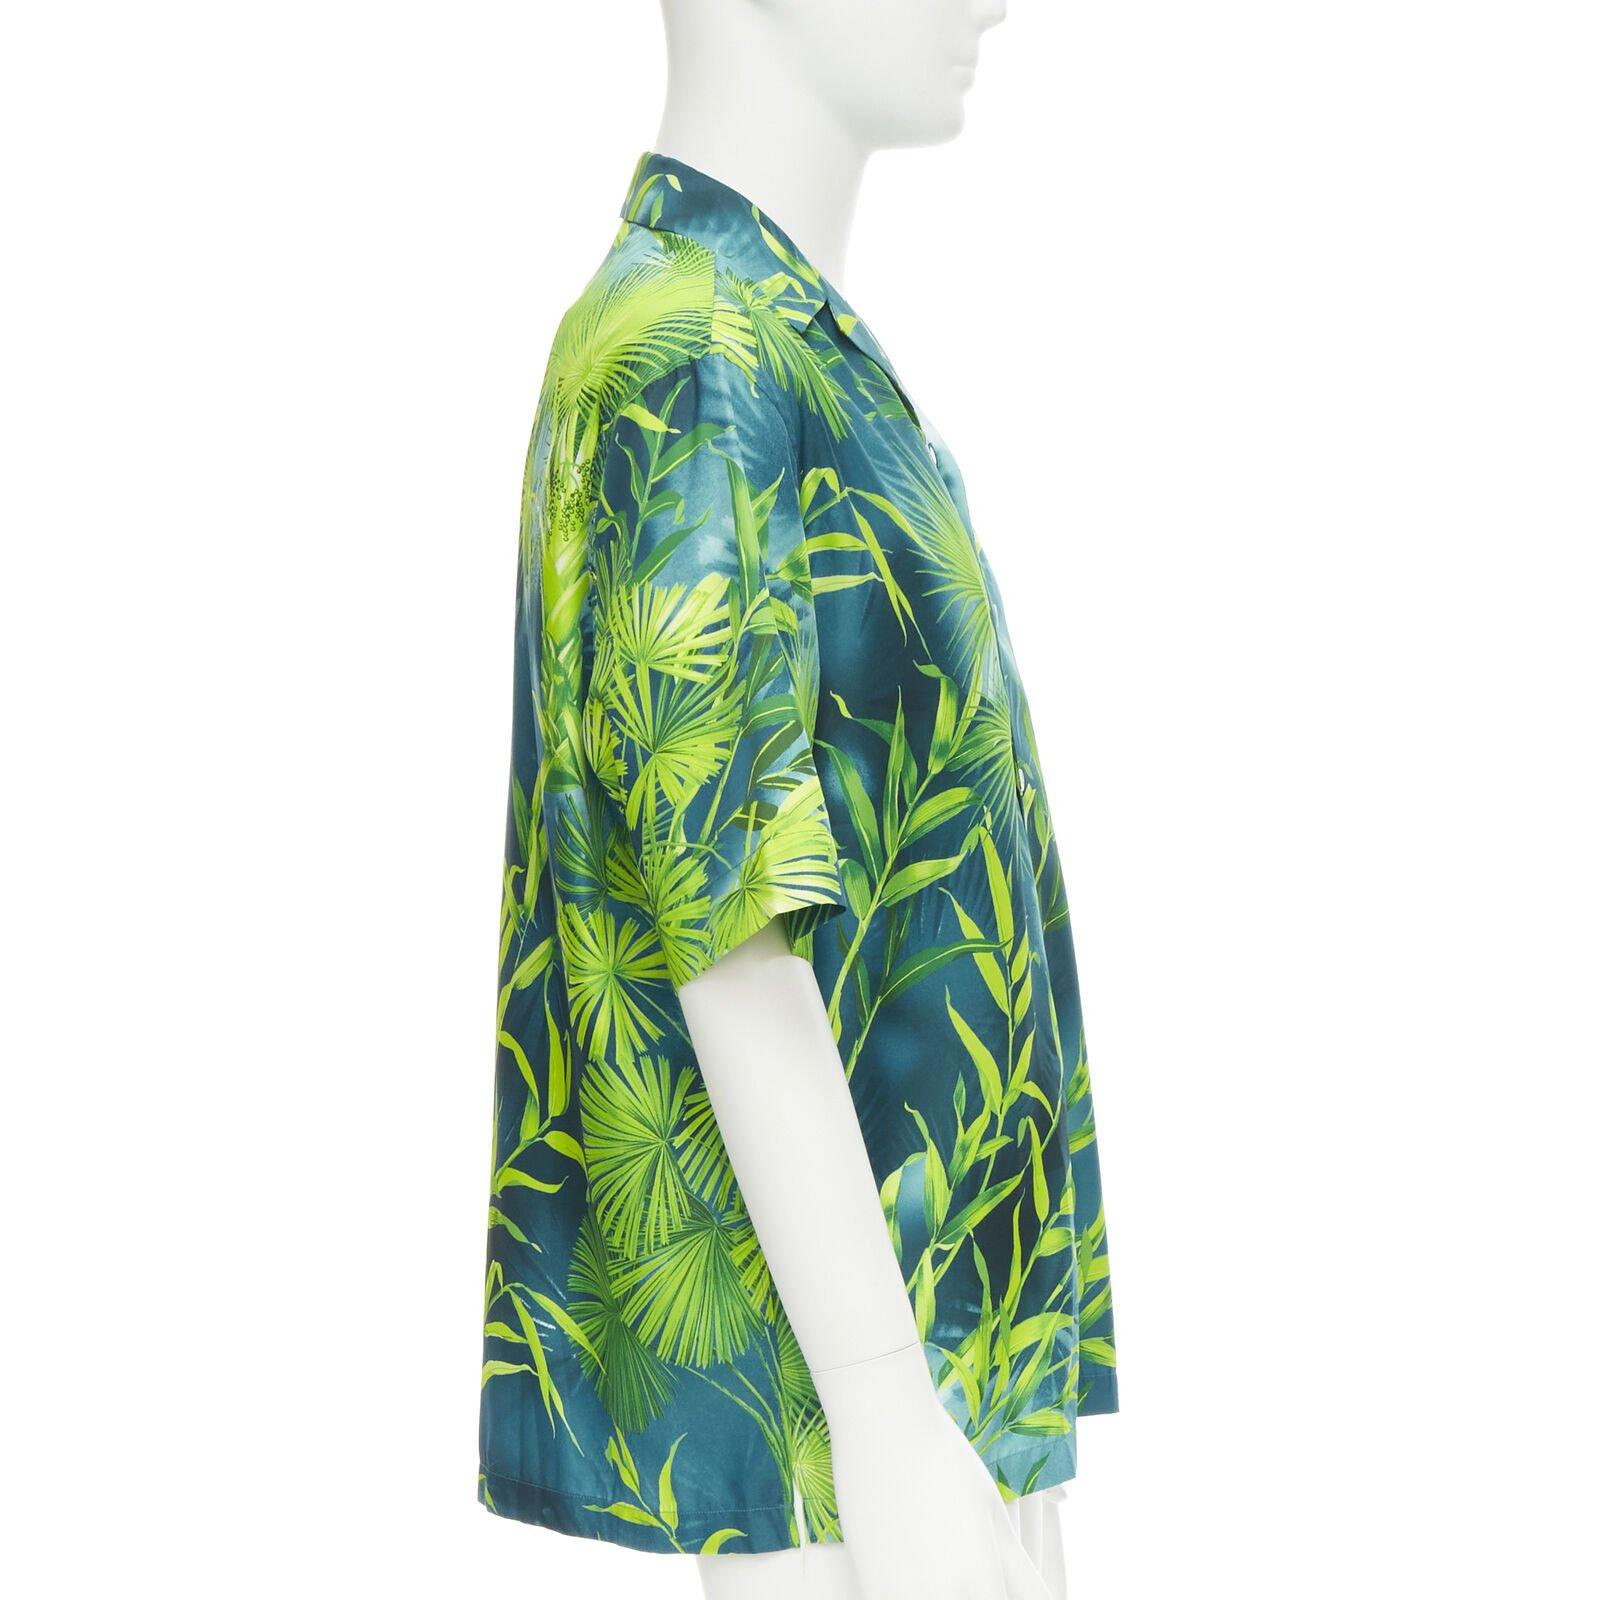 Men's VERSACE 2020 Iconic JLo Jungle print green tropical print shirt EU41 XL